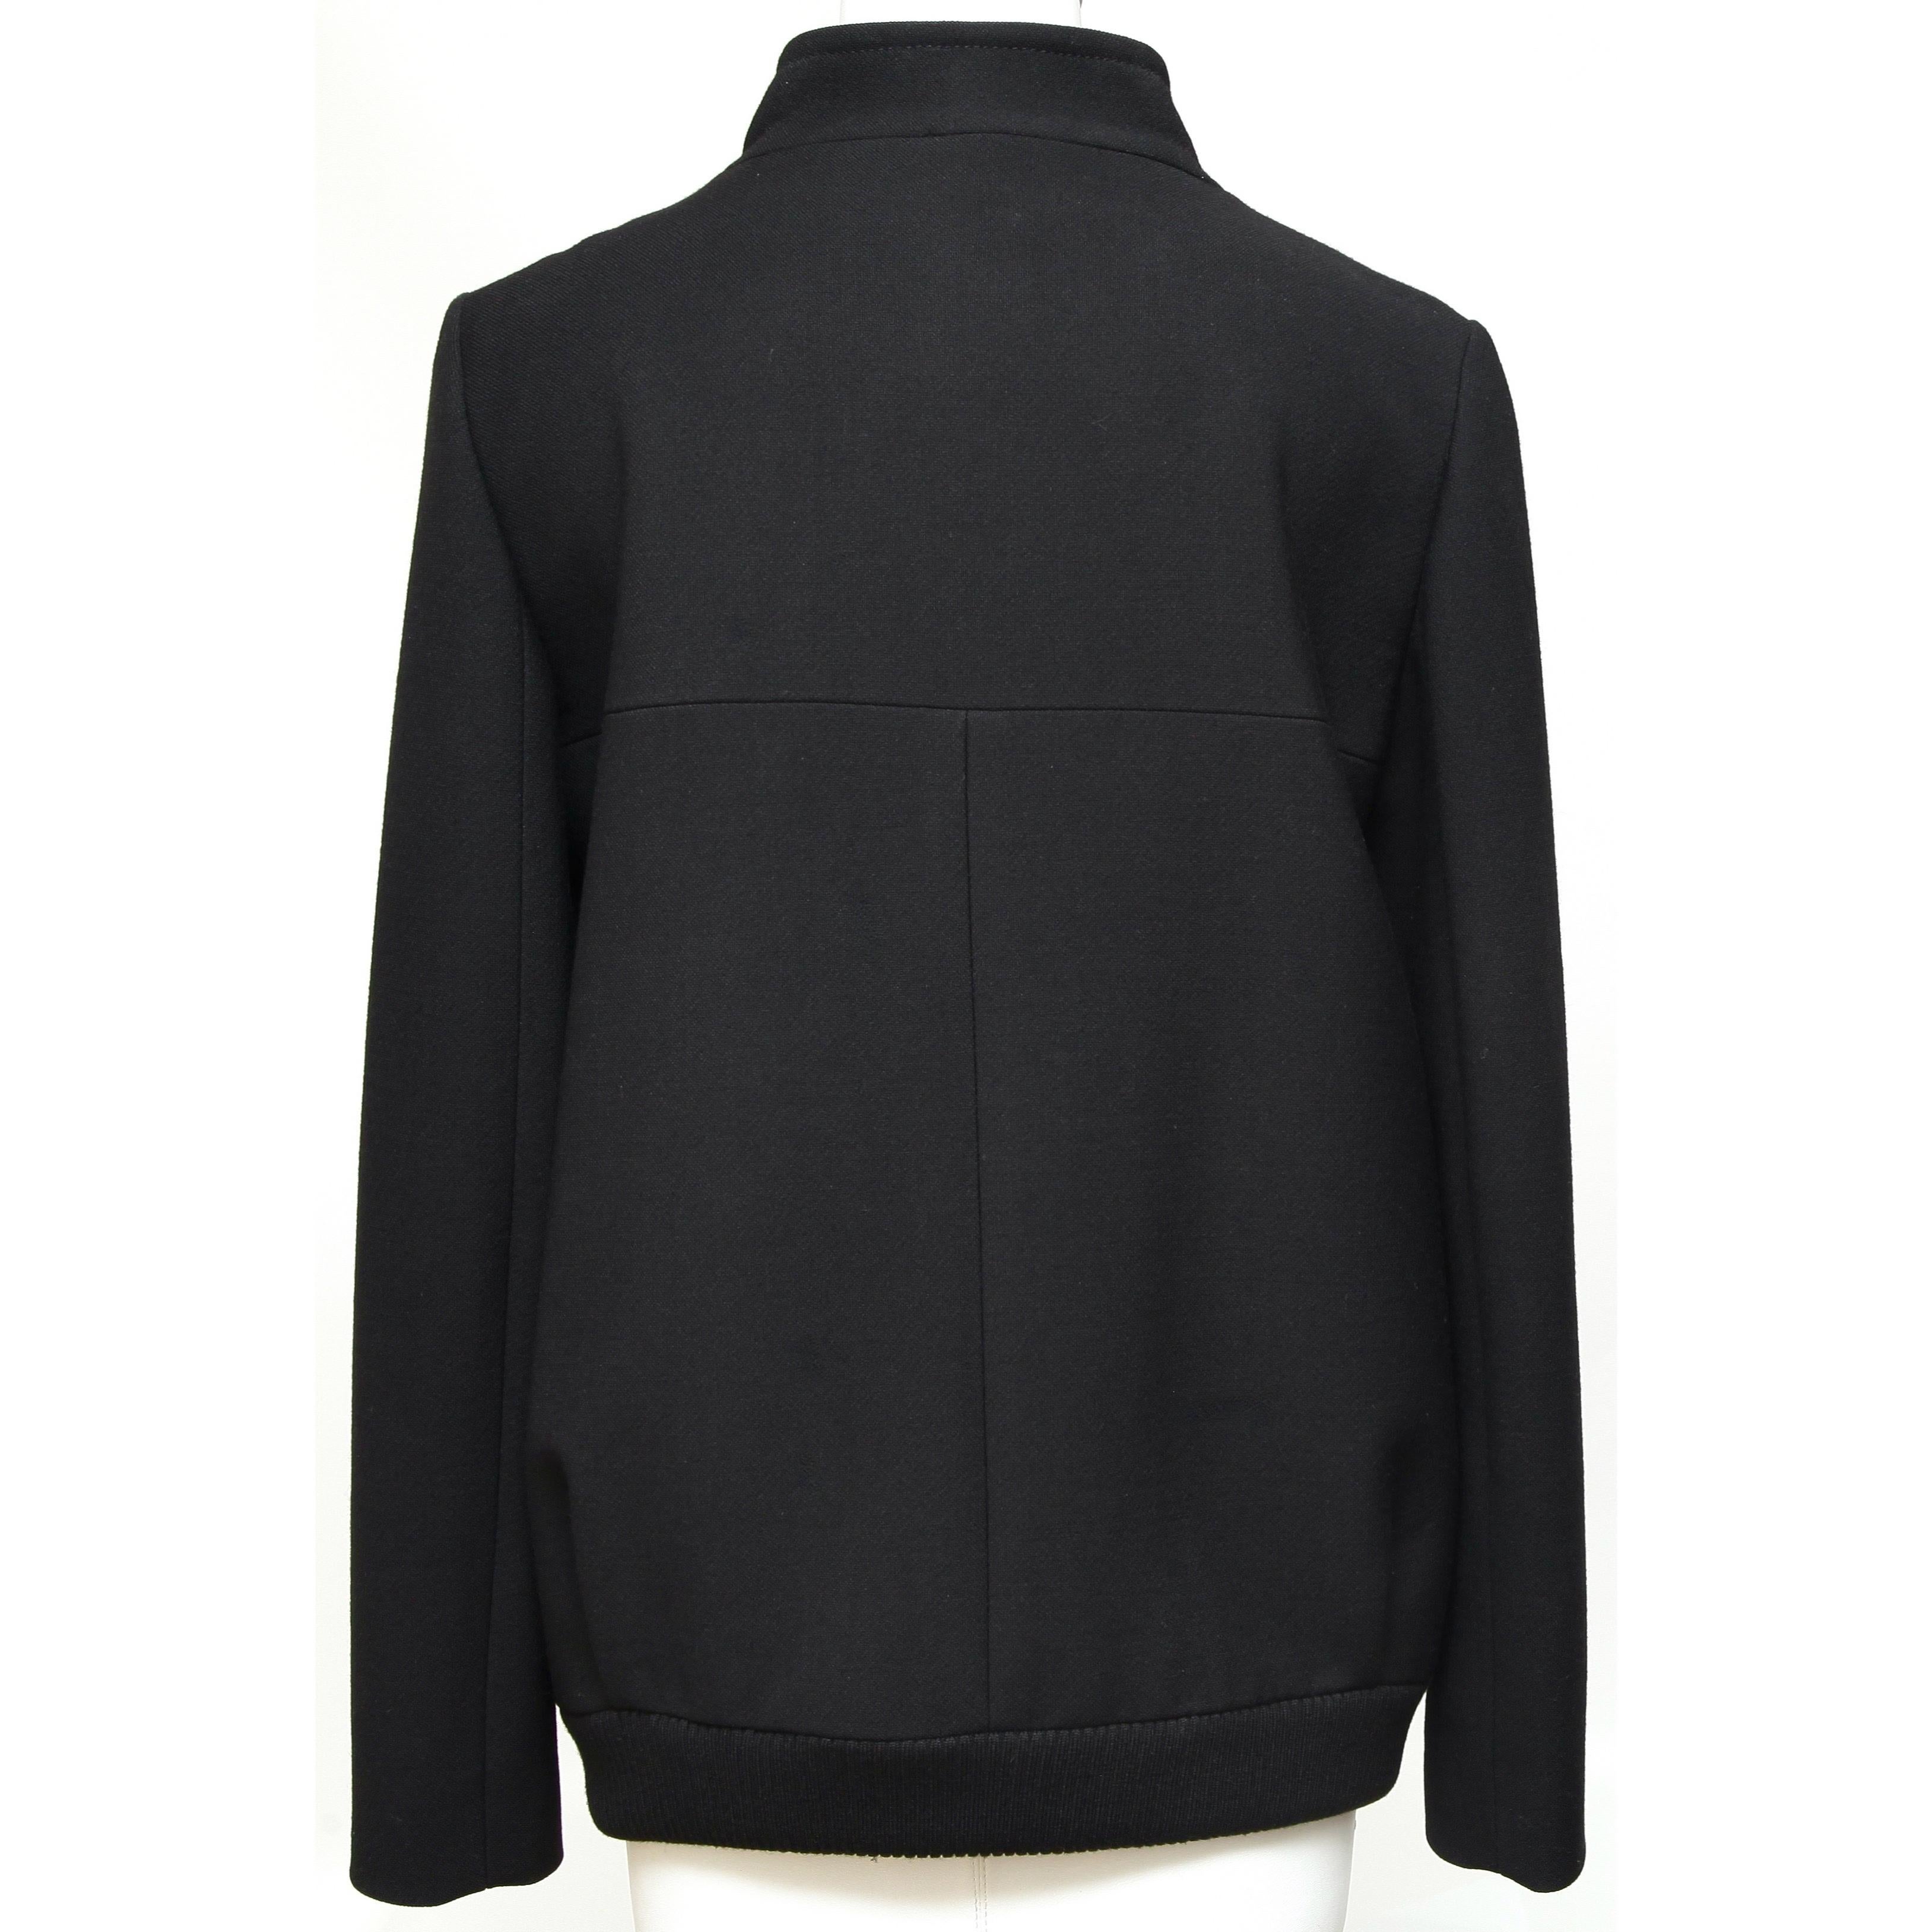 Women's CHLOE Black Coat Jacket Long Sleeve Zipper Stand Up Collar Sz 36 2007 For Sale